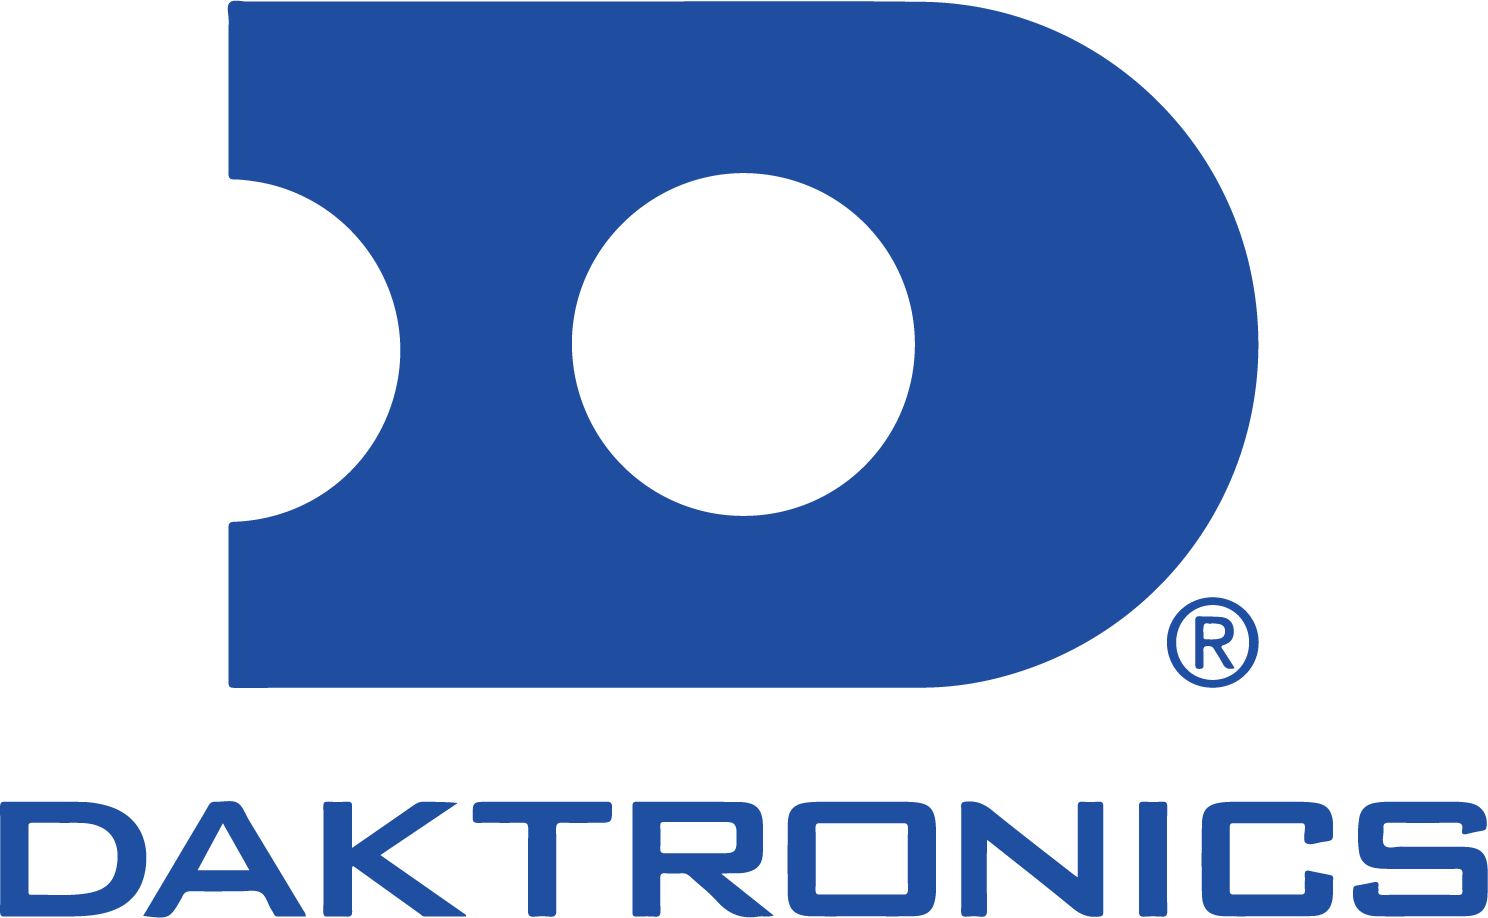 Daktronics logo large (transparent PNG)